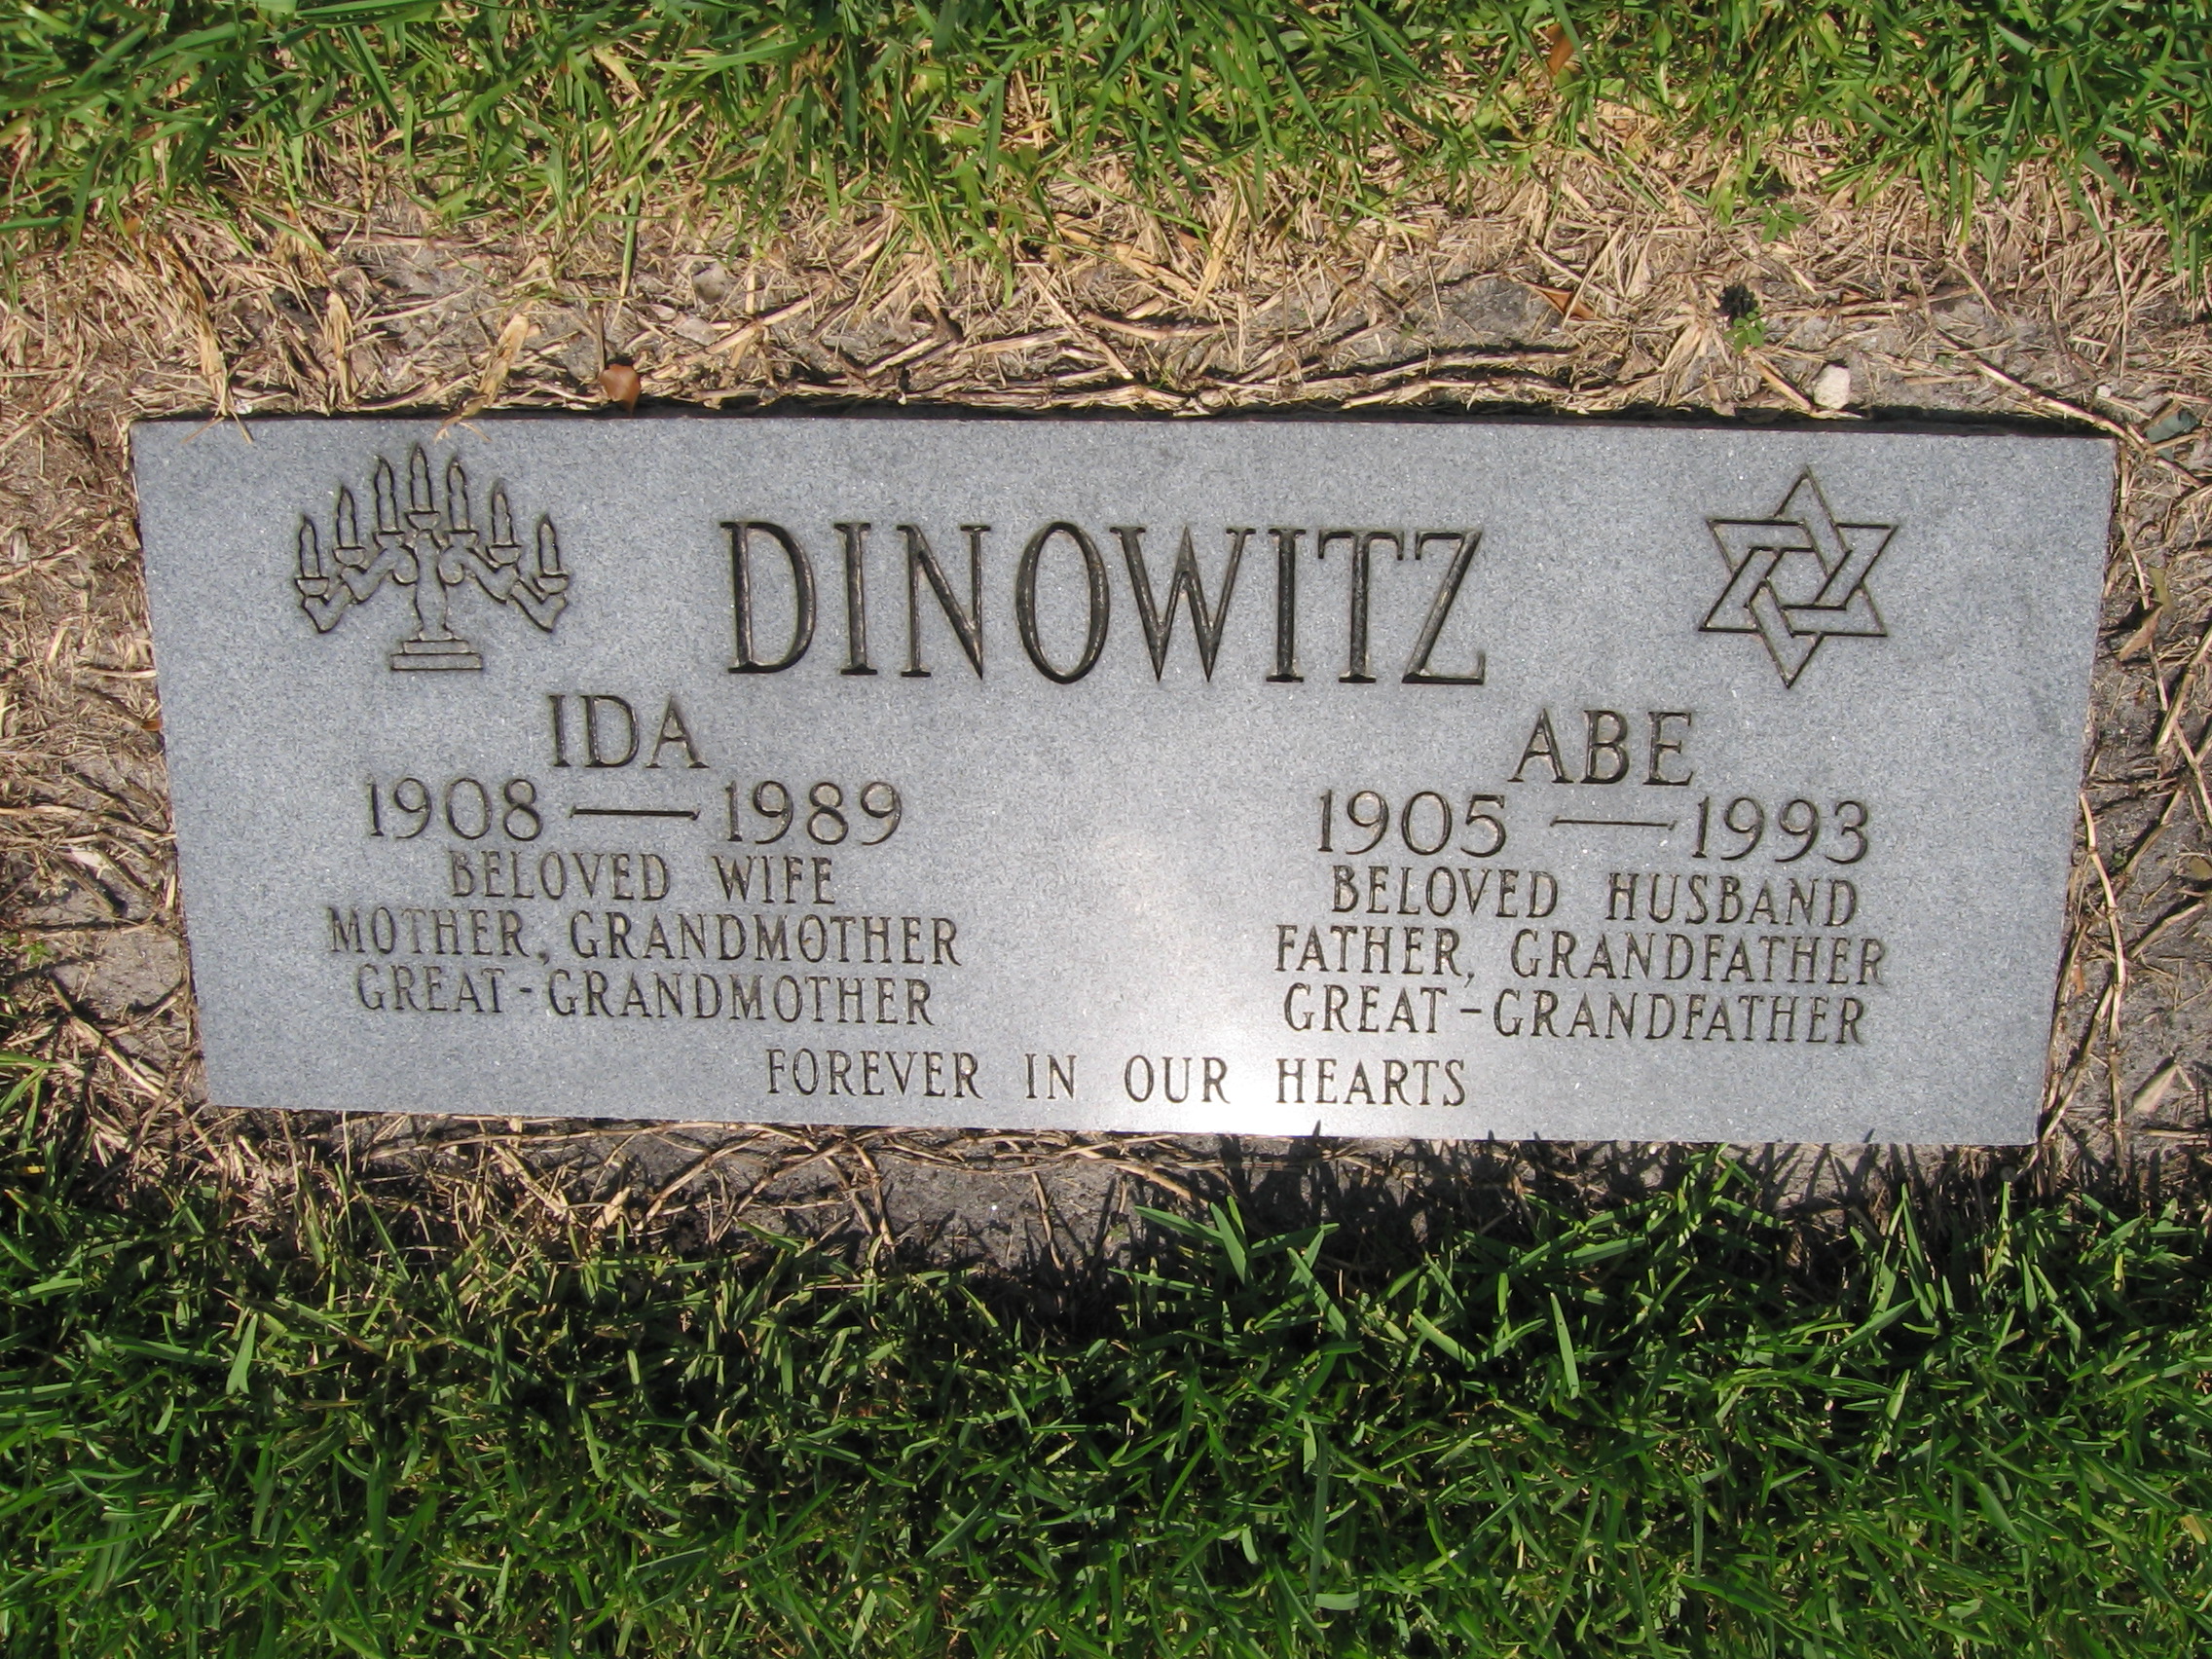 Ida Dinowitz